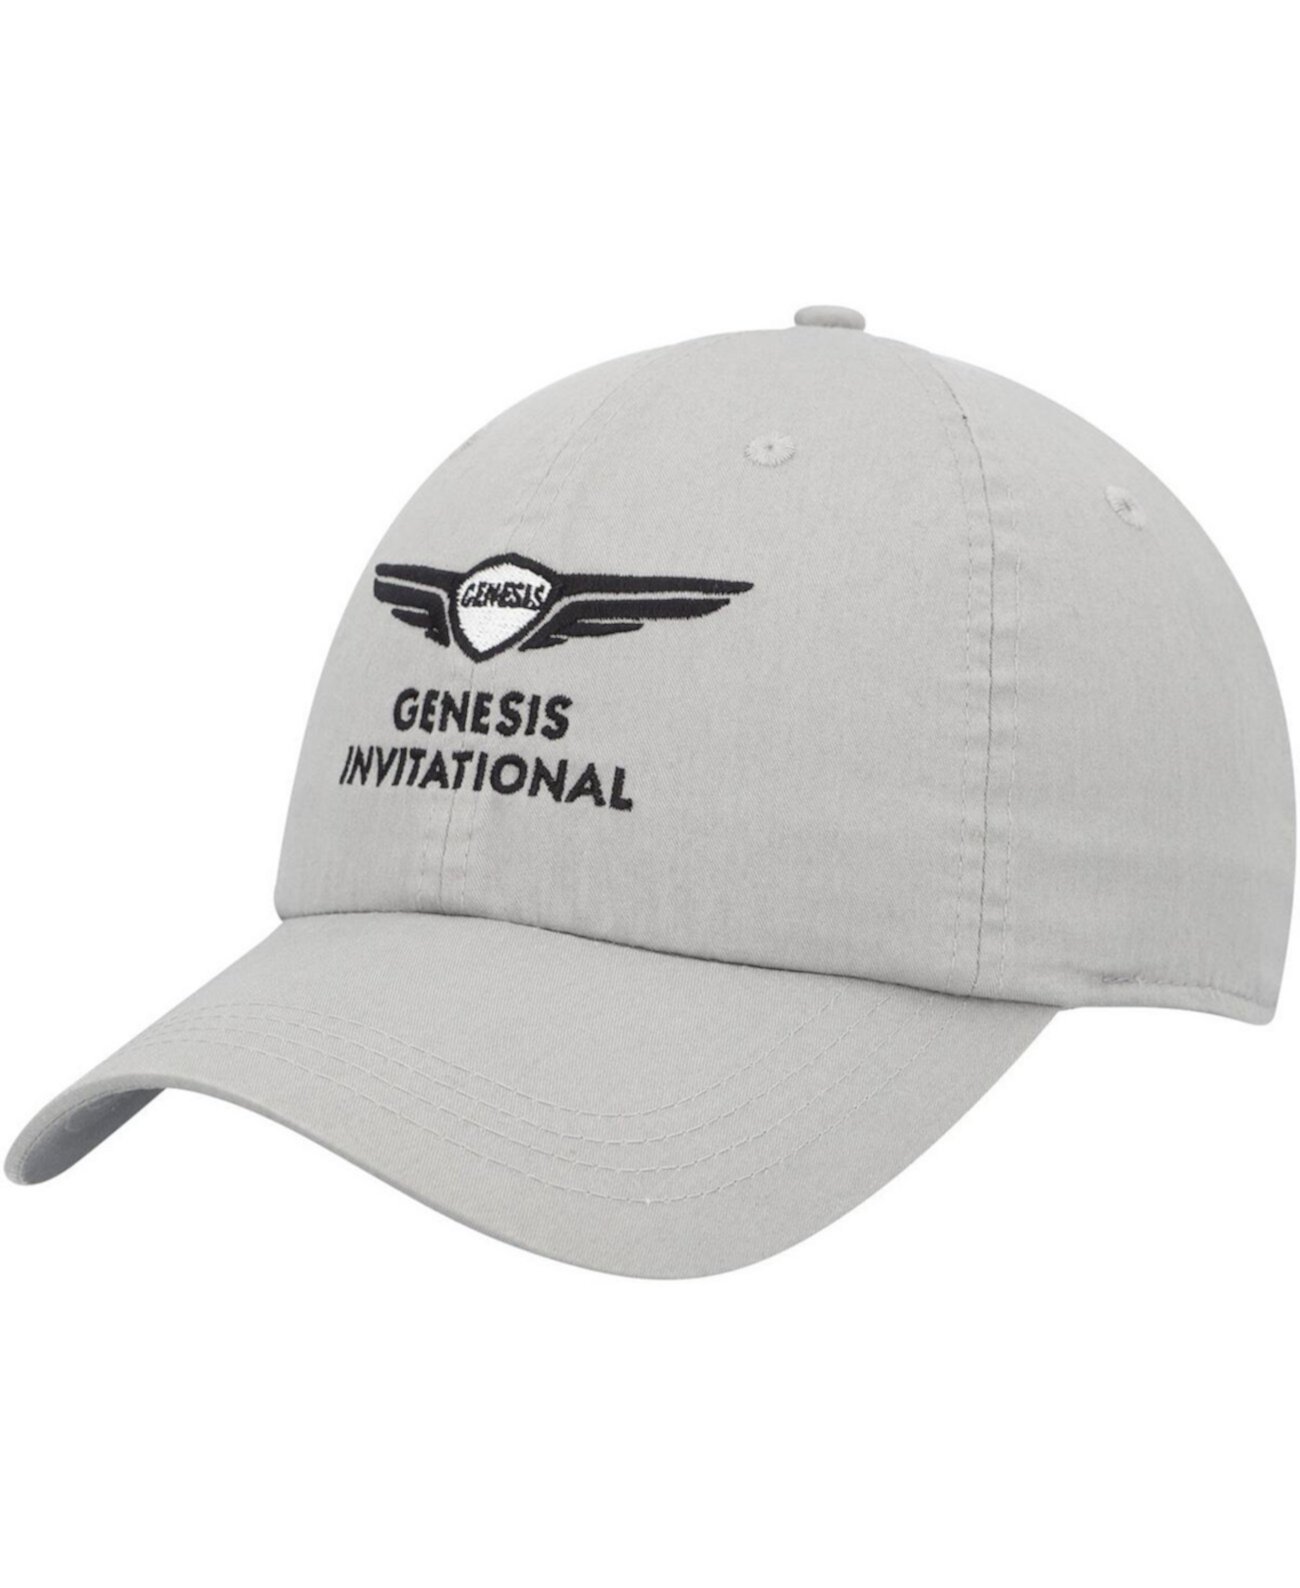 Men's Gray Genesis Invitational Shawmut Adjustable Hat Ahead